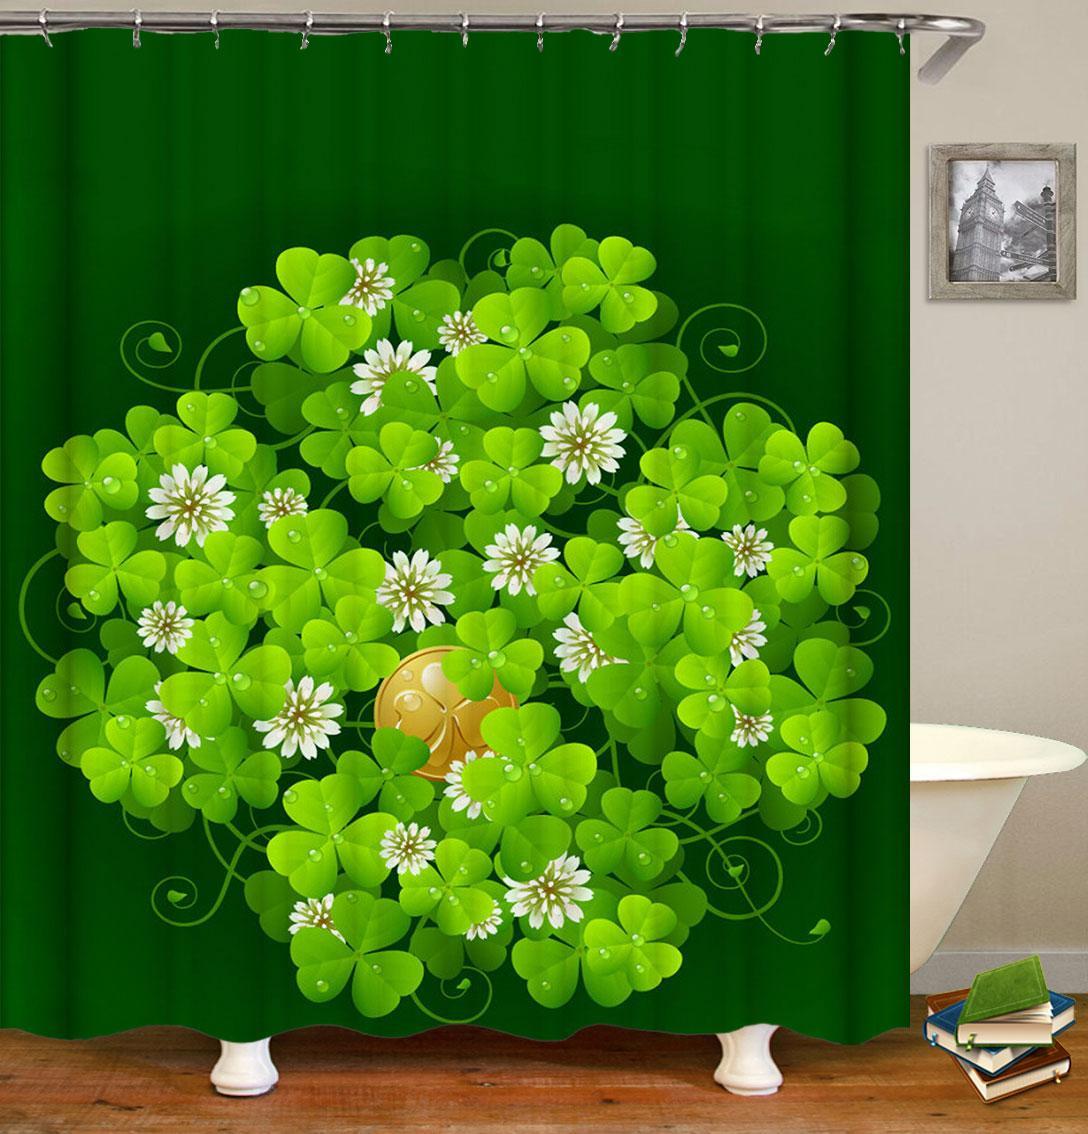 Green Clovers and Clover Flowers Shower Curtain 120cm x 180cm + 60cm x 40cm Set